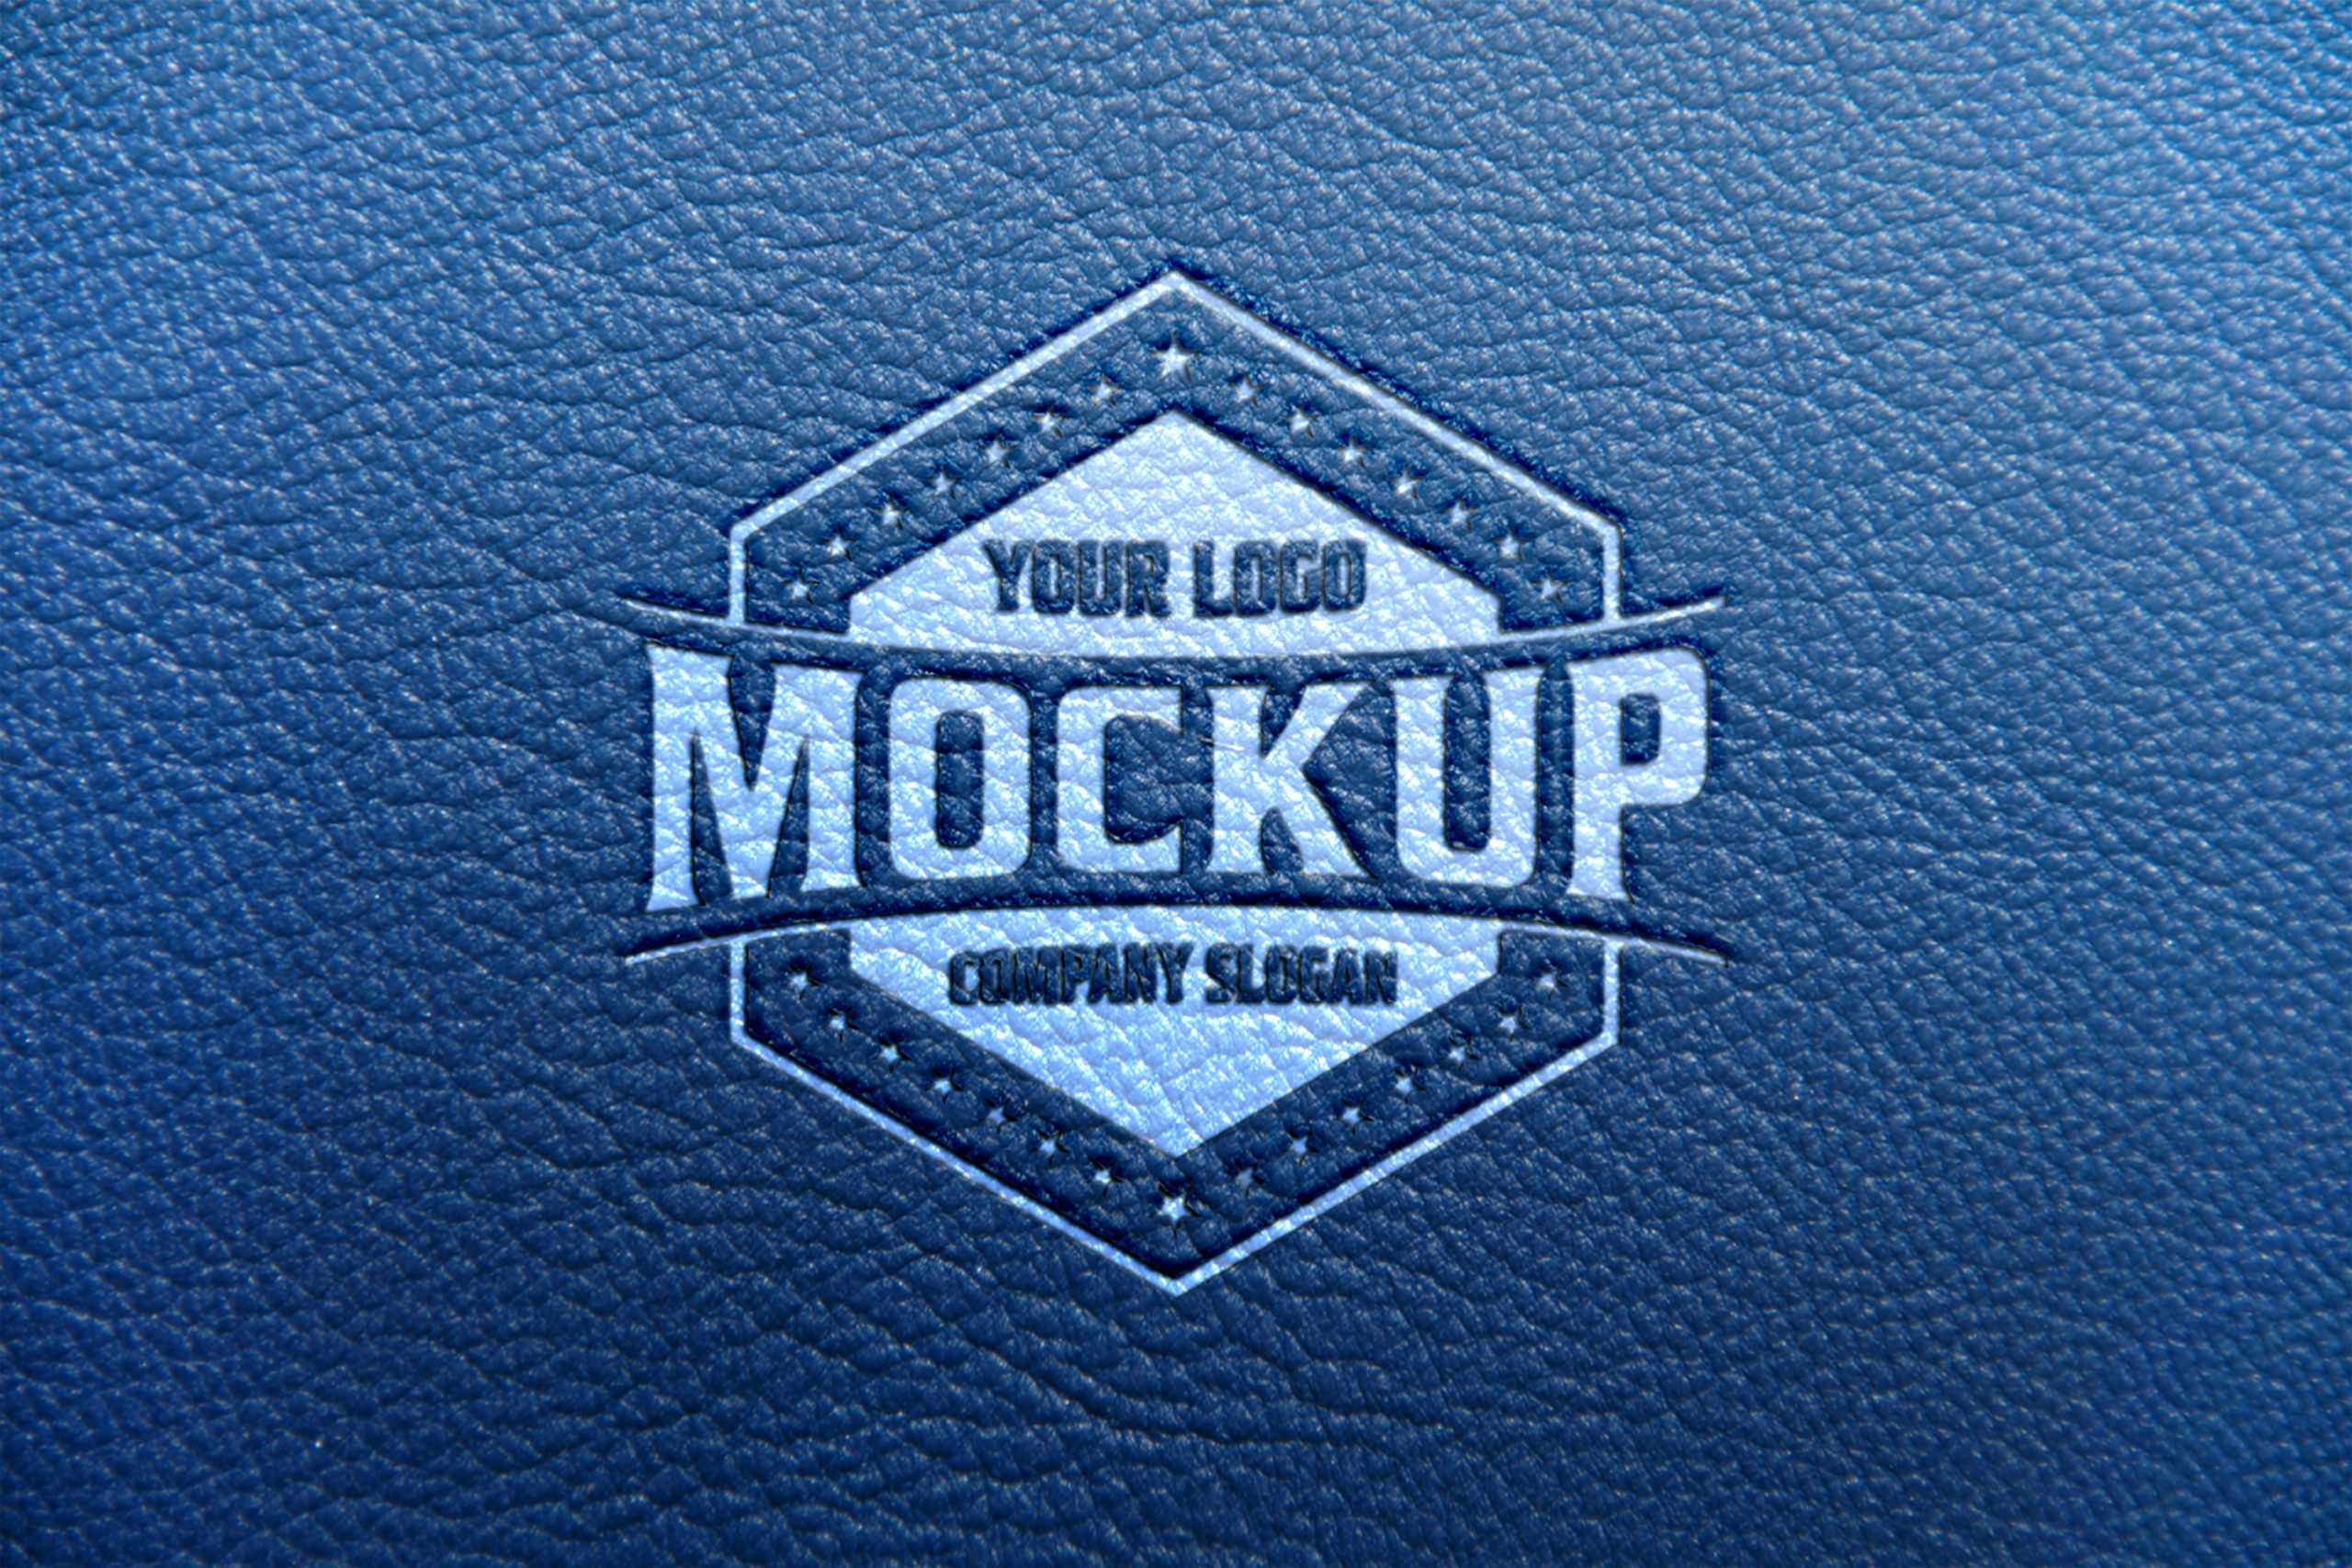 Embossed Leather Logo Design Mockup Stock Template